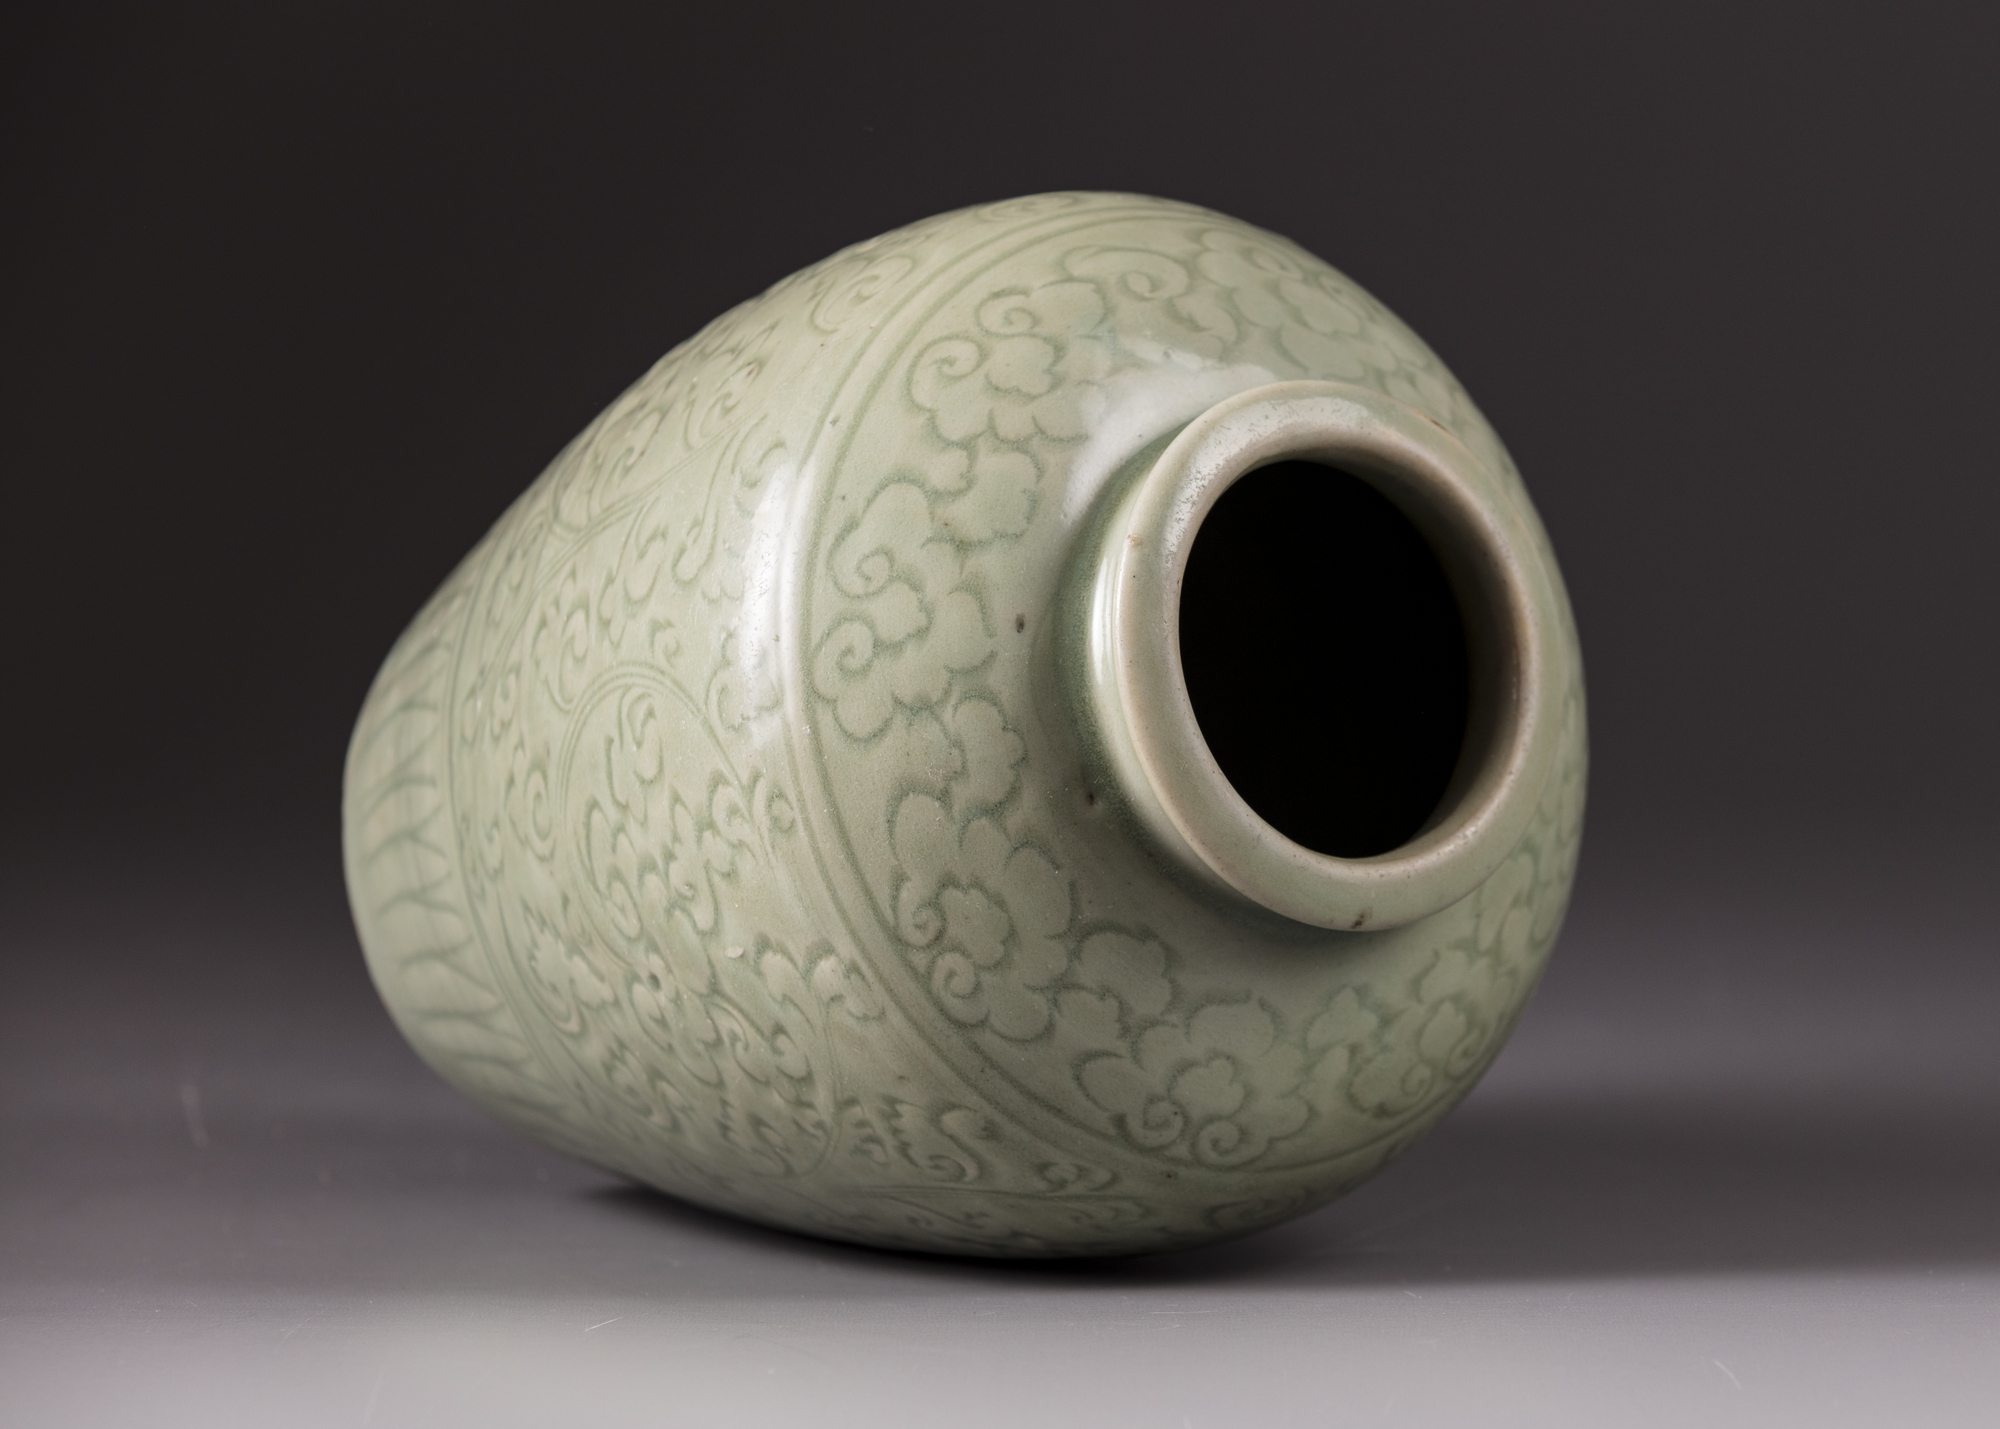 A celadon-glazed pot